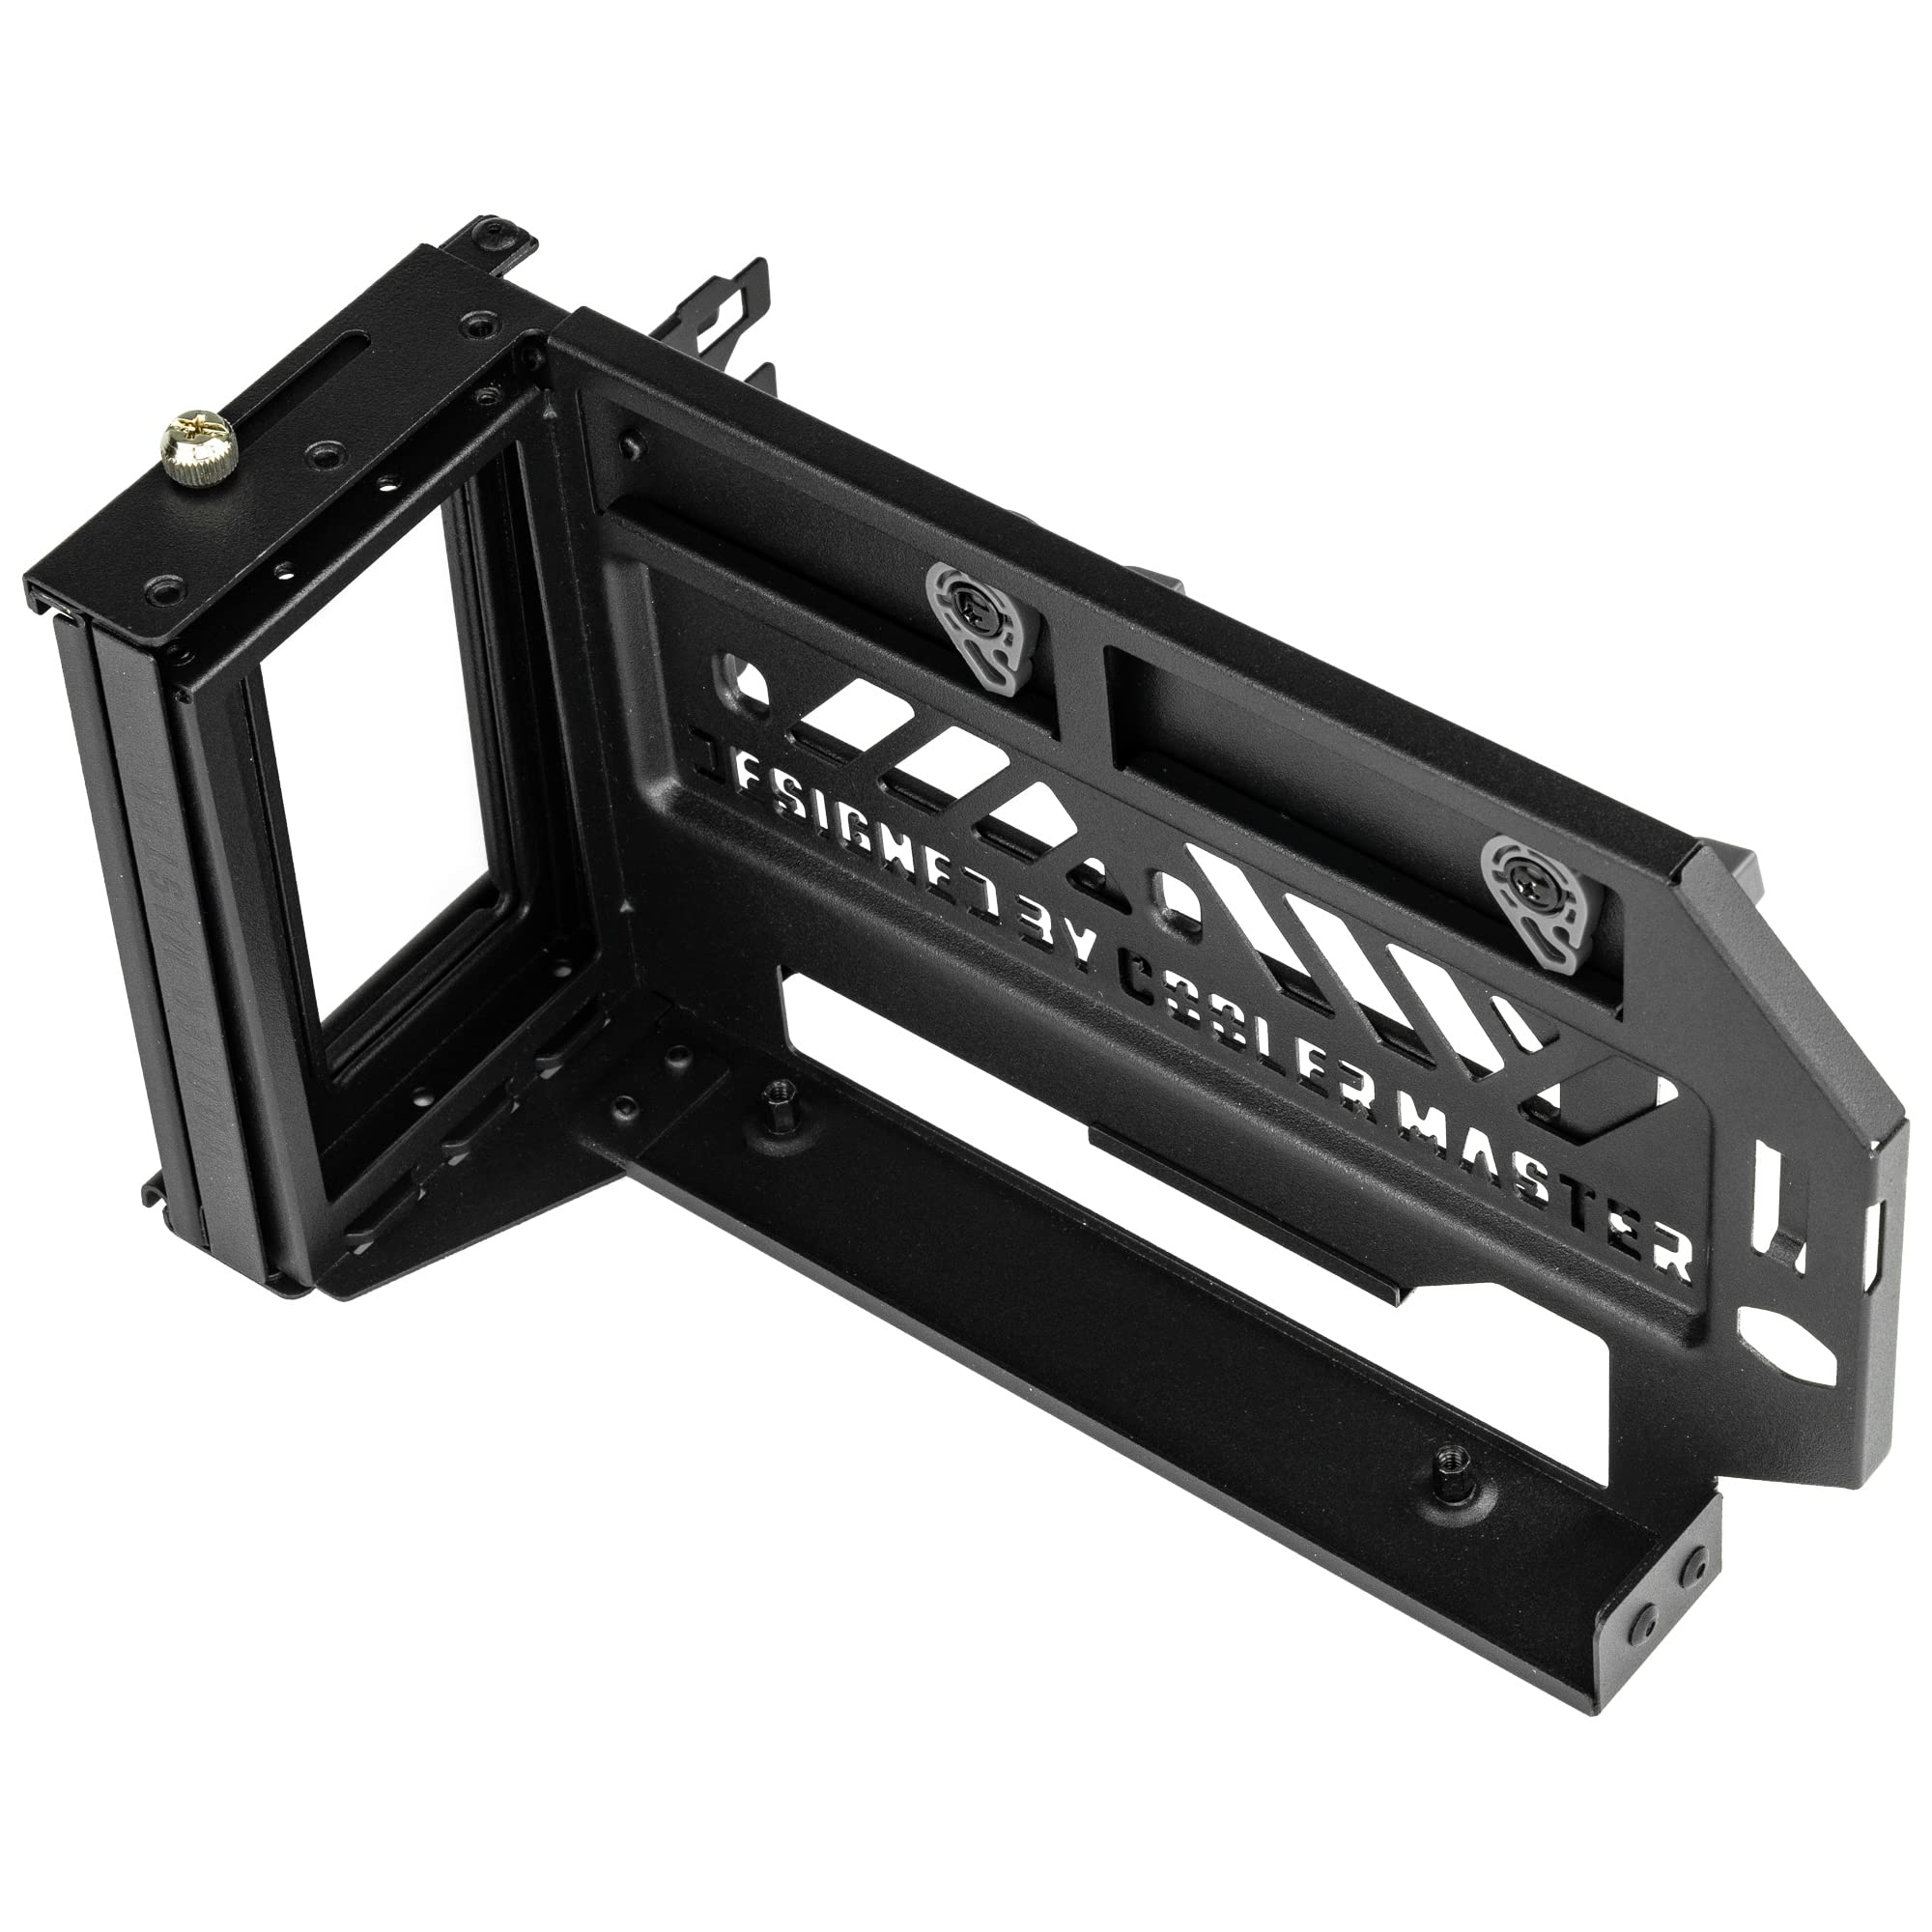 Soporte Para Gpu Cooler Master Kit V3 Color Negro Pcie 40 Incluye Cable Pcie Mca U000R Kfvk03 - COOLER MASTER